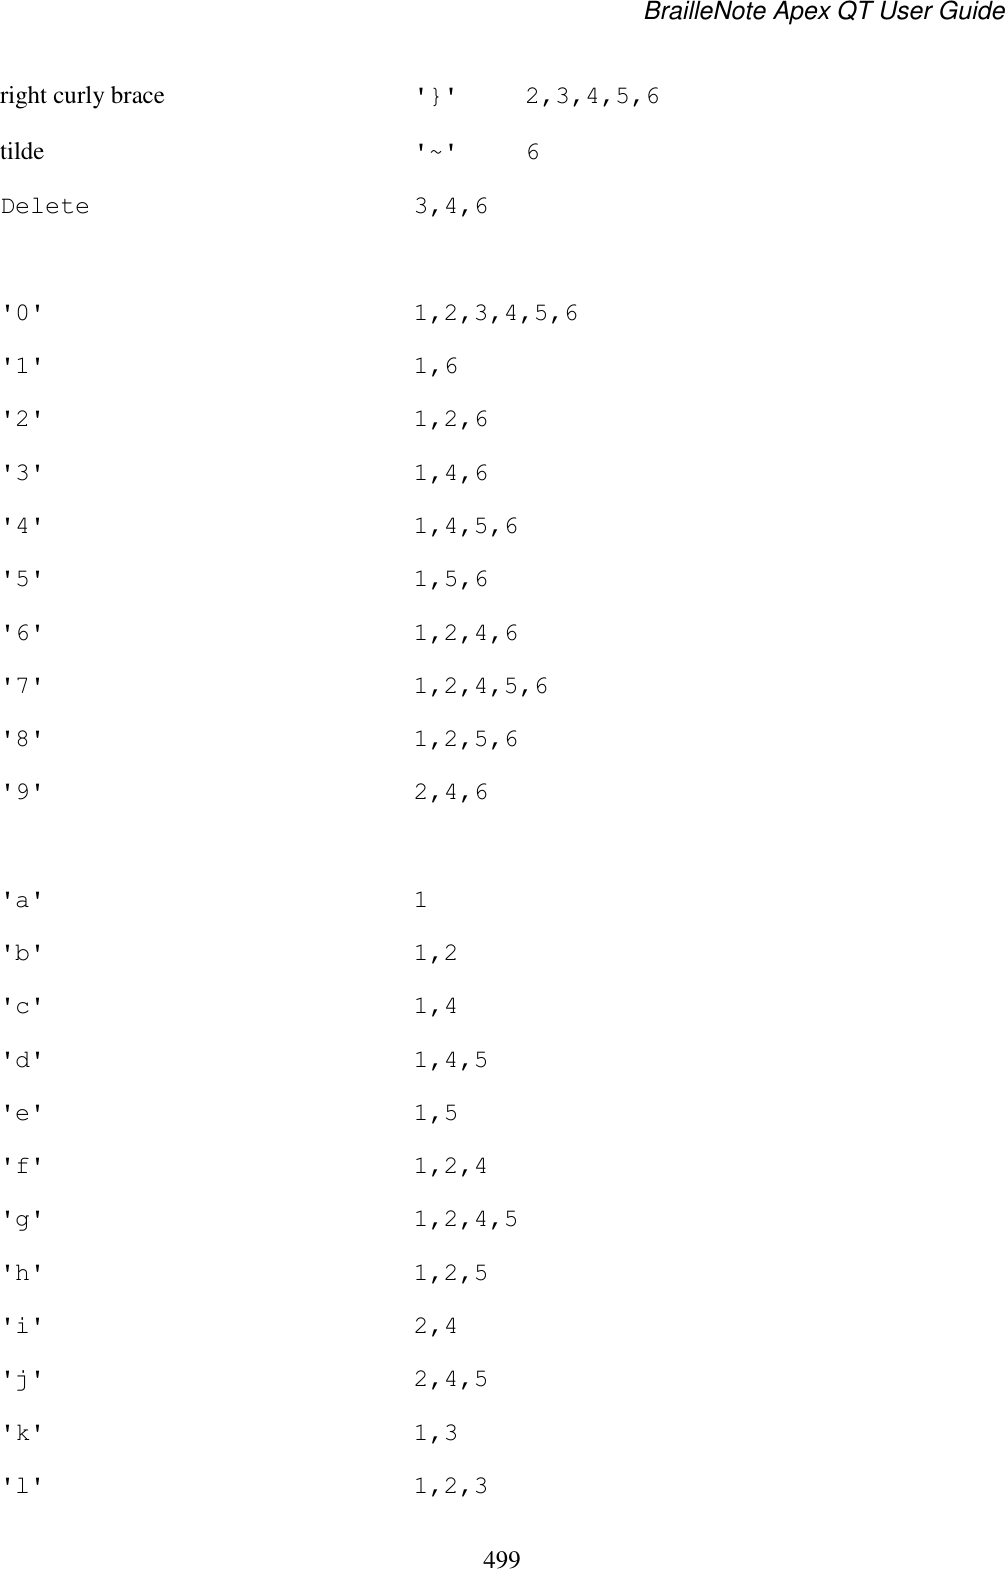 BrailleNote Apex QT User Guide  499  right curly brace  &apos;}&apos;  2,3,4,5,6 tilde  &apos;~&apos;  6 Delete  3,4,6  &apos;0&apos;  1,2,3,4,5,6 &apos;1&apos;  1,6 &apos;2&apos;  1,2,6 &apos;3&apos;  1,4,6 &apos;4&apos;  1,4,5,6 &apos;5&apos;  1,5,6 &apos;6&apos;  1,2,4,6 &apos;7&apos;  1,2,4,5,6 &apos;8&apos;  1,2,5,6 &apos;9&apos;  2,4,6  &apos;a&apos;  1 &apos;b&apos;  1,2 &apos;c&apos;  1,4 &apos;d&apos;  1,4,5 &apos;e&apos;  1,5 &apos;f&apos;  1,2,4 &apos;g&apos;  1,2,4,5 &apos;h&apos;  1,2,5 &apos;i&apos;  2,4 &apos;j&apos;  2,4,5 &apos;k&apos;  1,3 &apos;l&apos;  1,2,3 